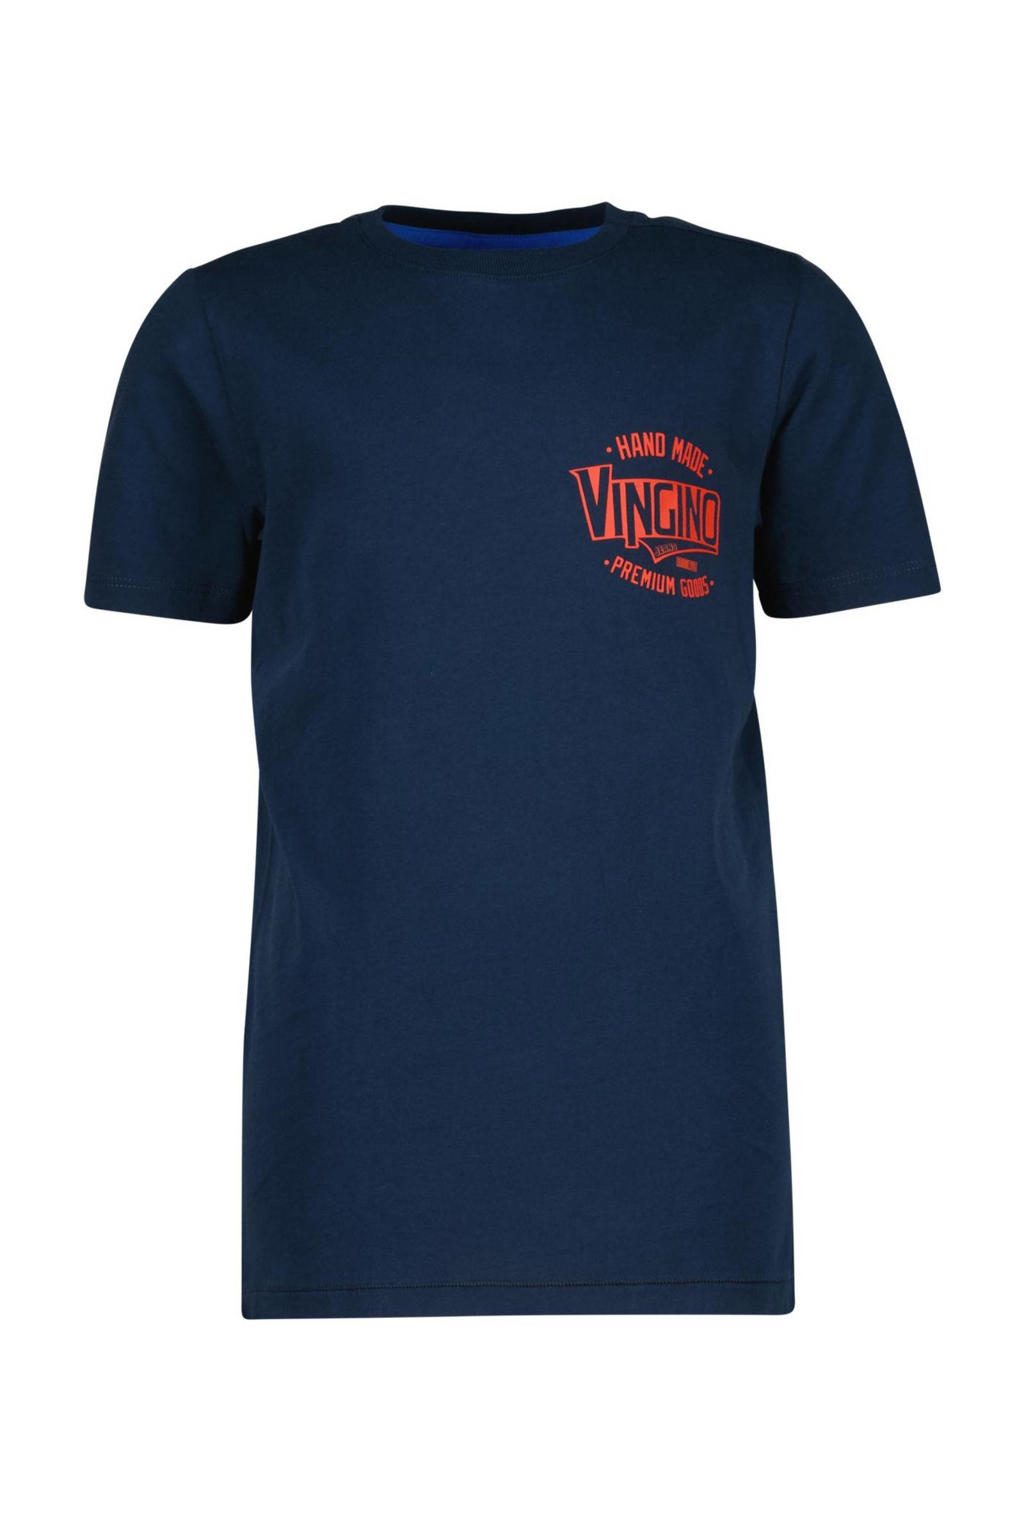 Vingino T-shirt Hamp met printopdruk donkerblauw